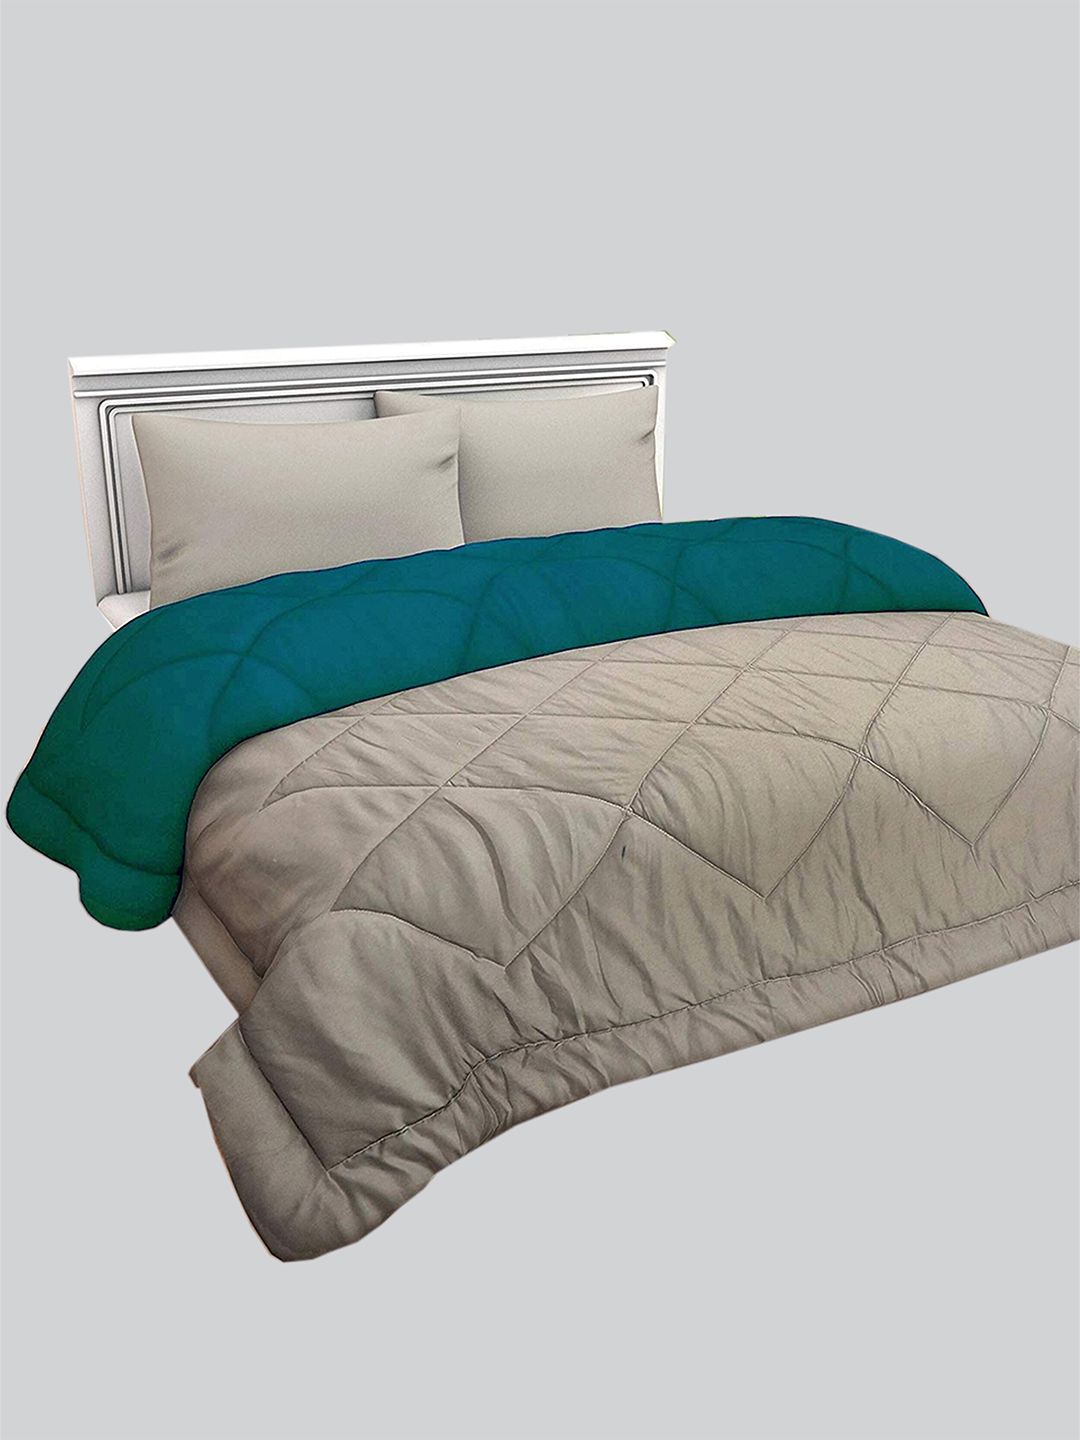 RAASO Teal & Grey Microfiber AC Room Double Bed Blanket Price in India